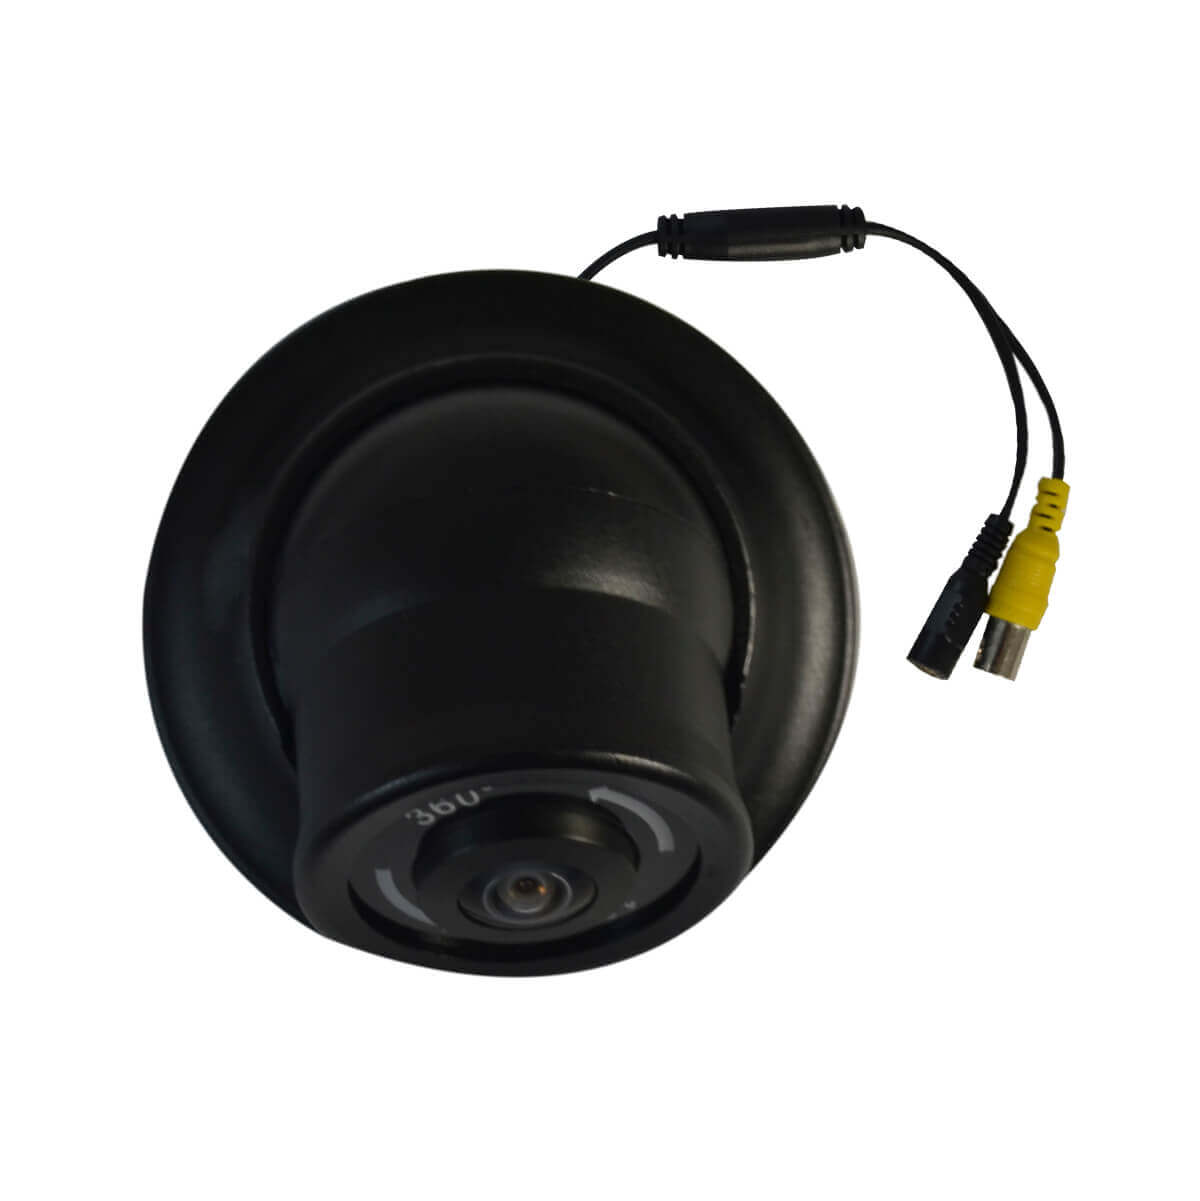 Mini camara tipo domo, Sensor Sony CCD 1/3, resolucion 600TVL, IP66